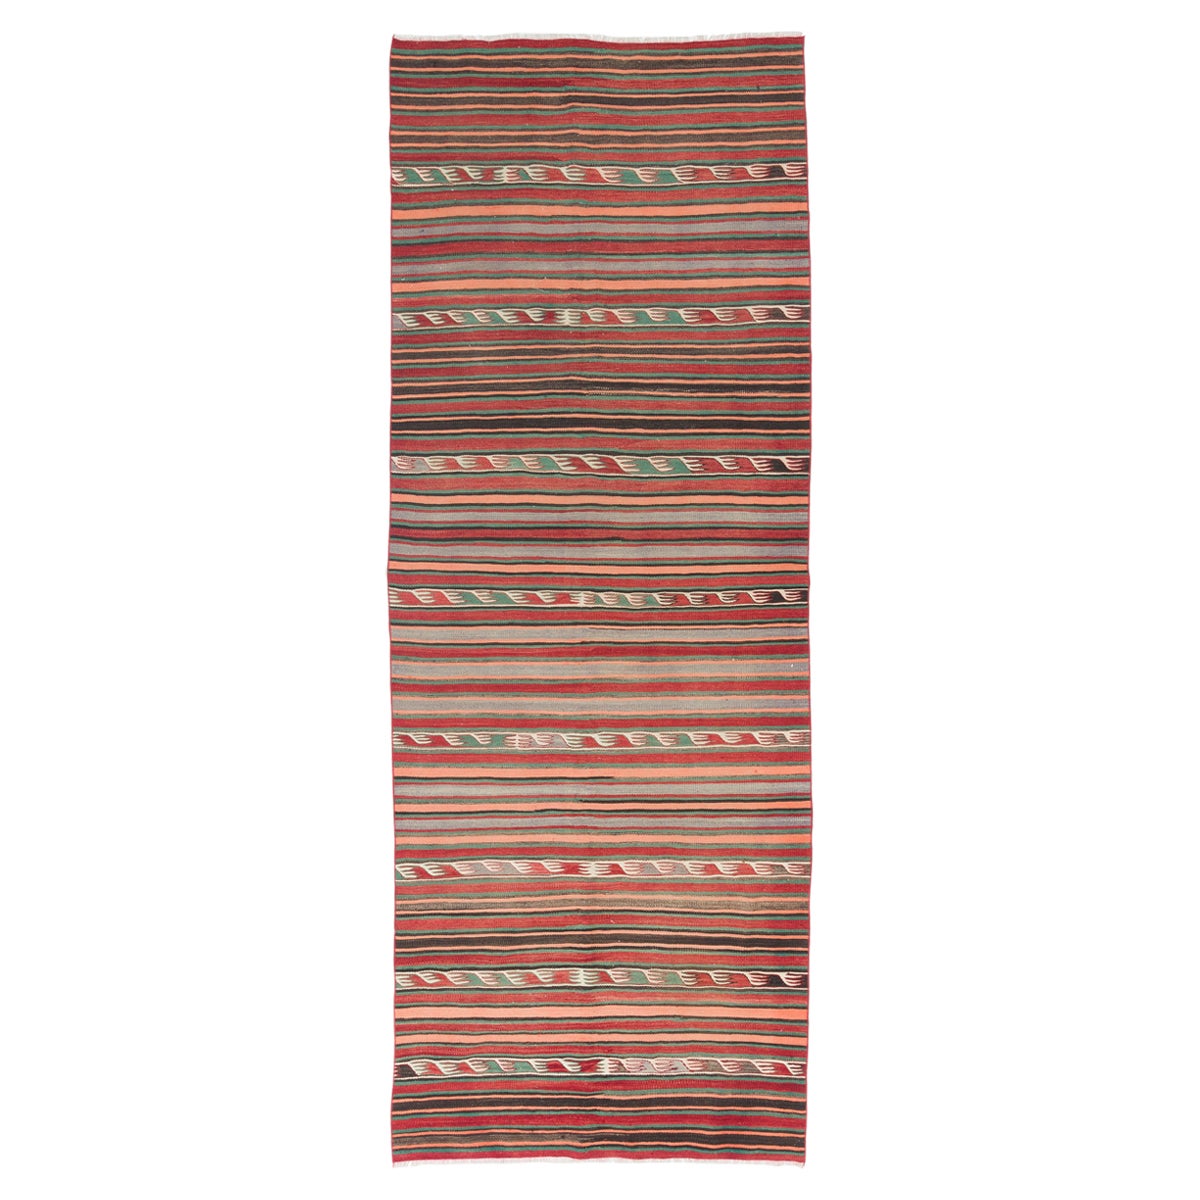 4.3x11.4 Ft Colorful Nomadic Kilim Rug, 100% Wool. Vintage Striped Runner Carpet